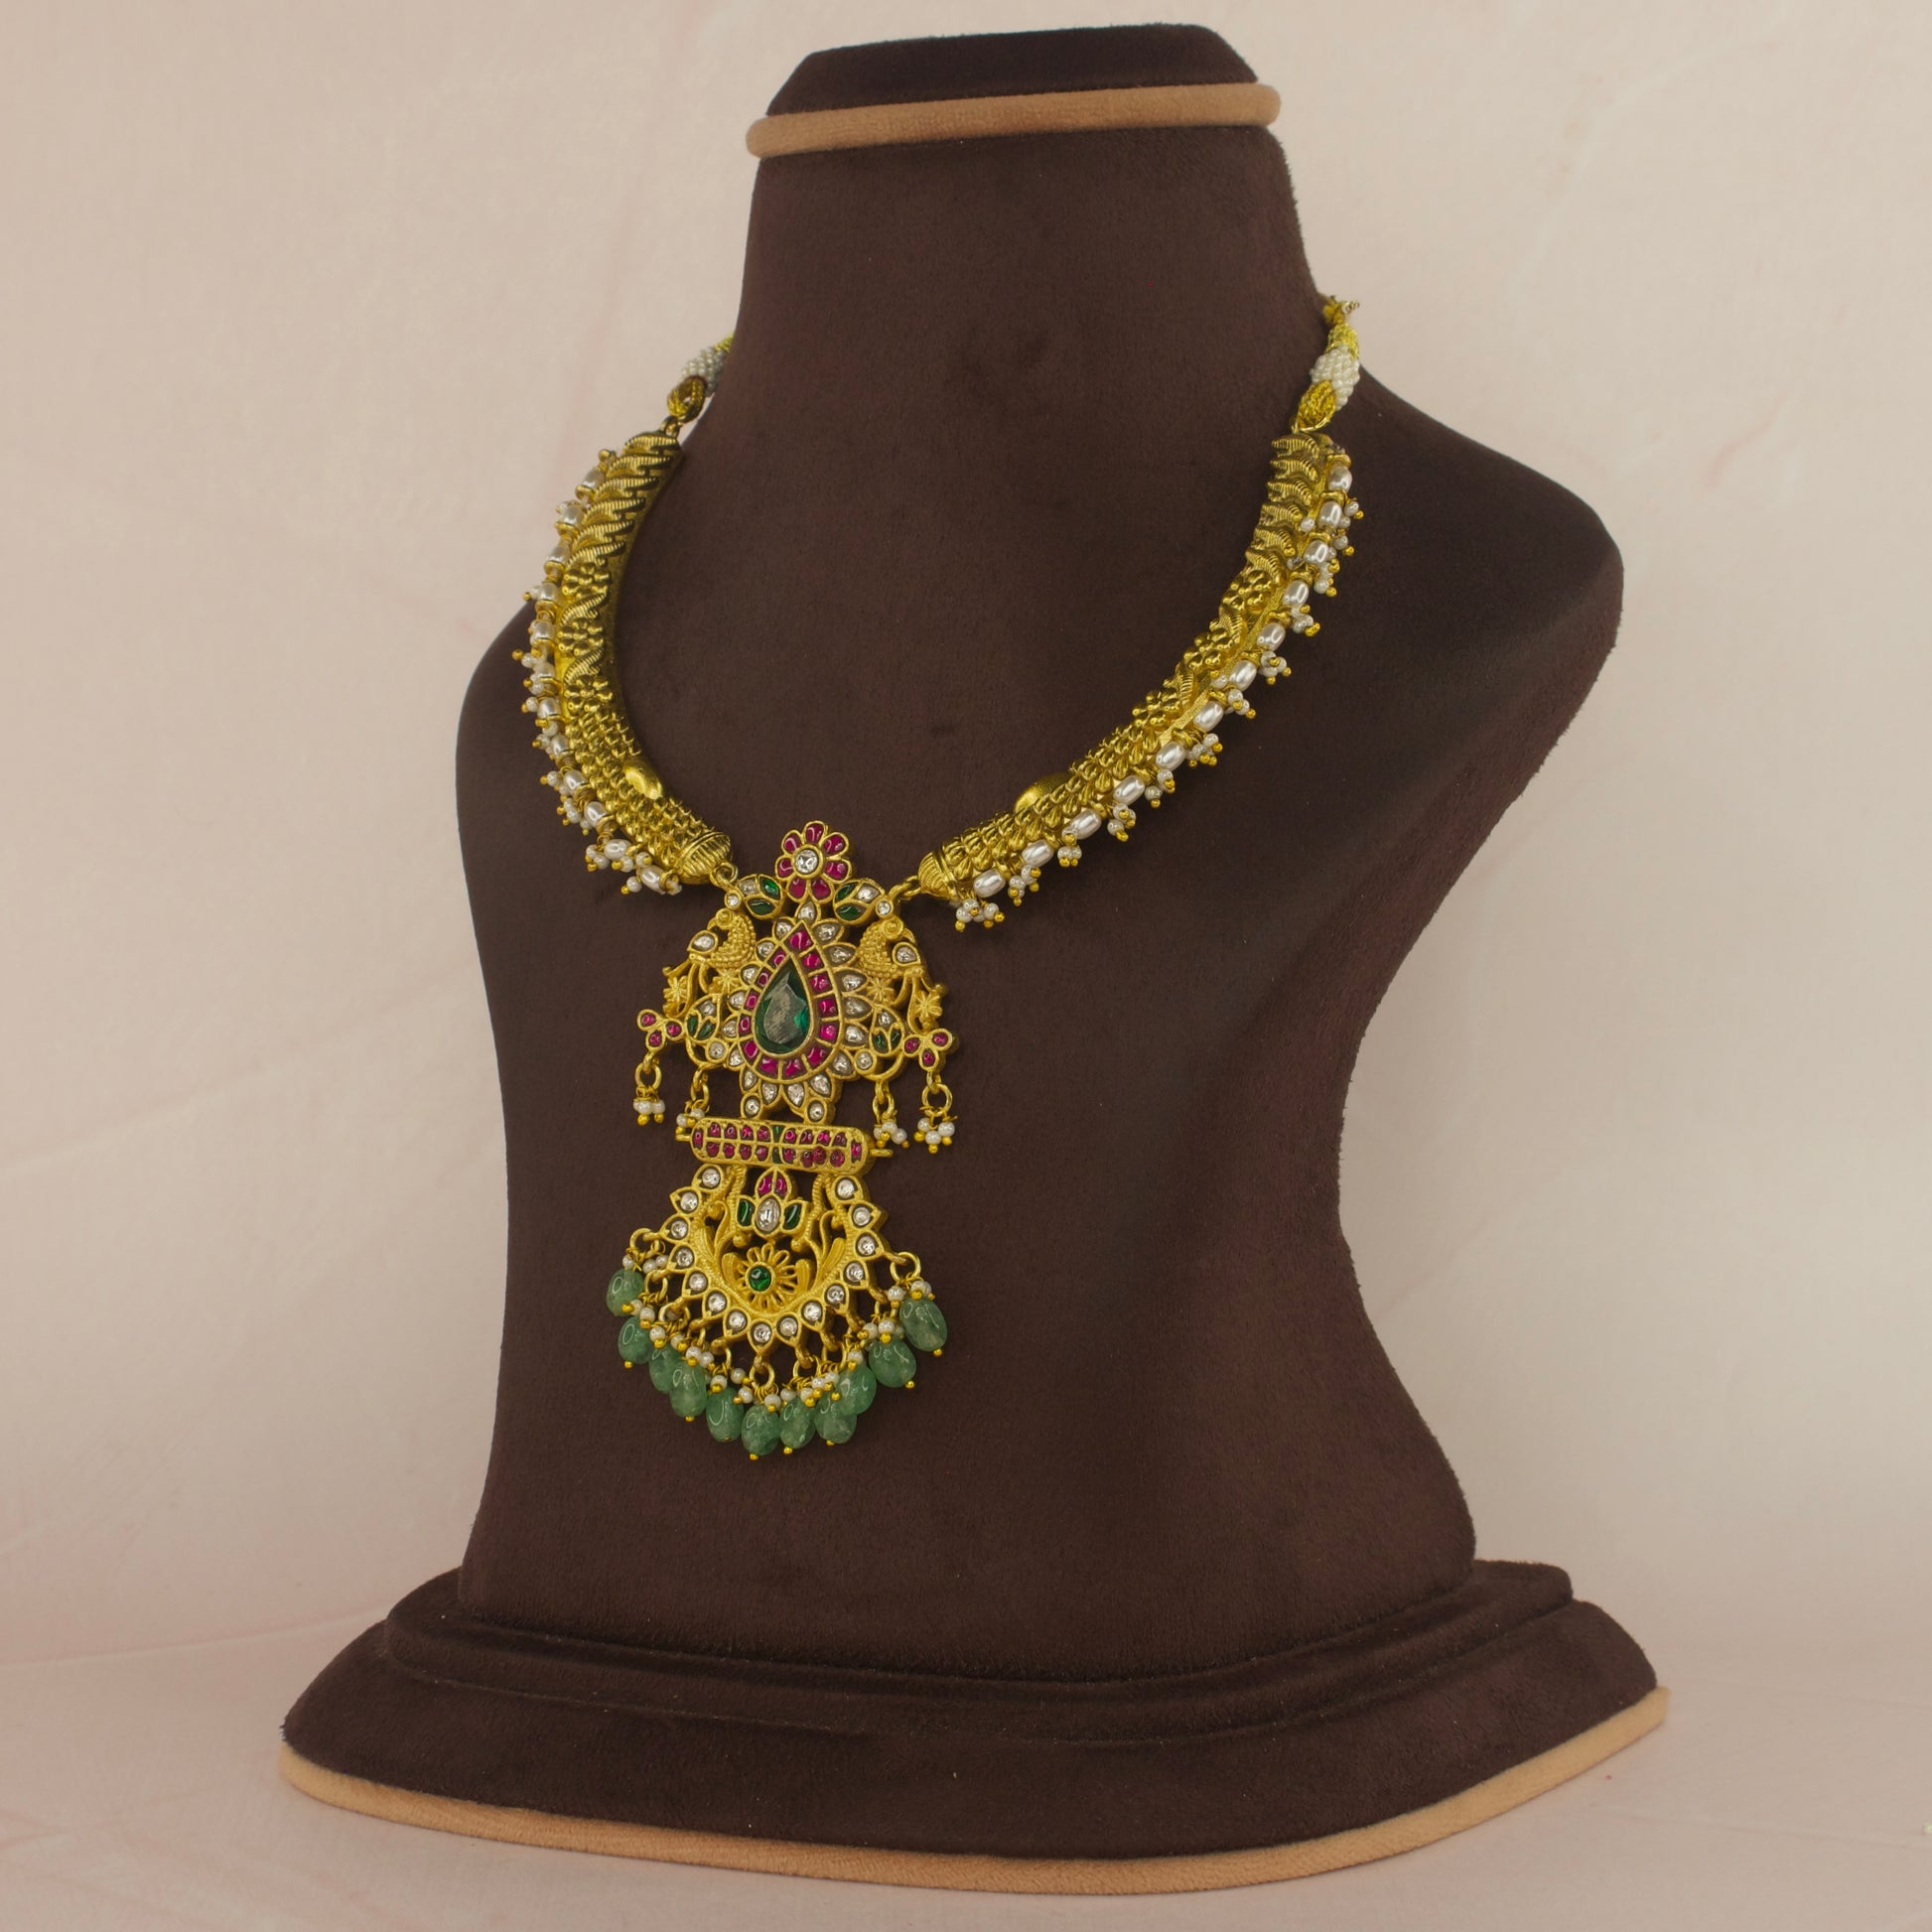 Regal Jadau Kundan Kanti Necklace with Pearl  Detailing with 22k gold plating. this product belongs to jadau kundan jewellery category